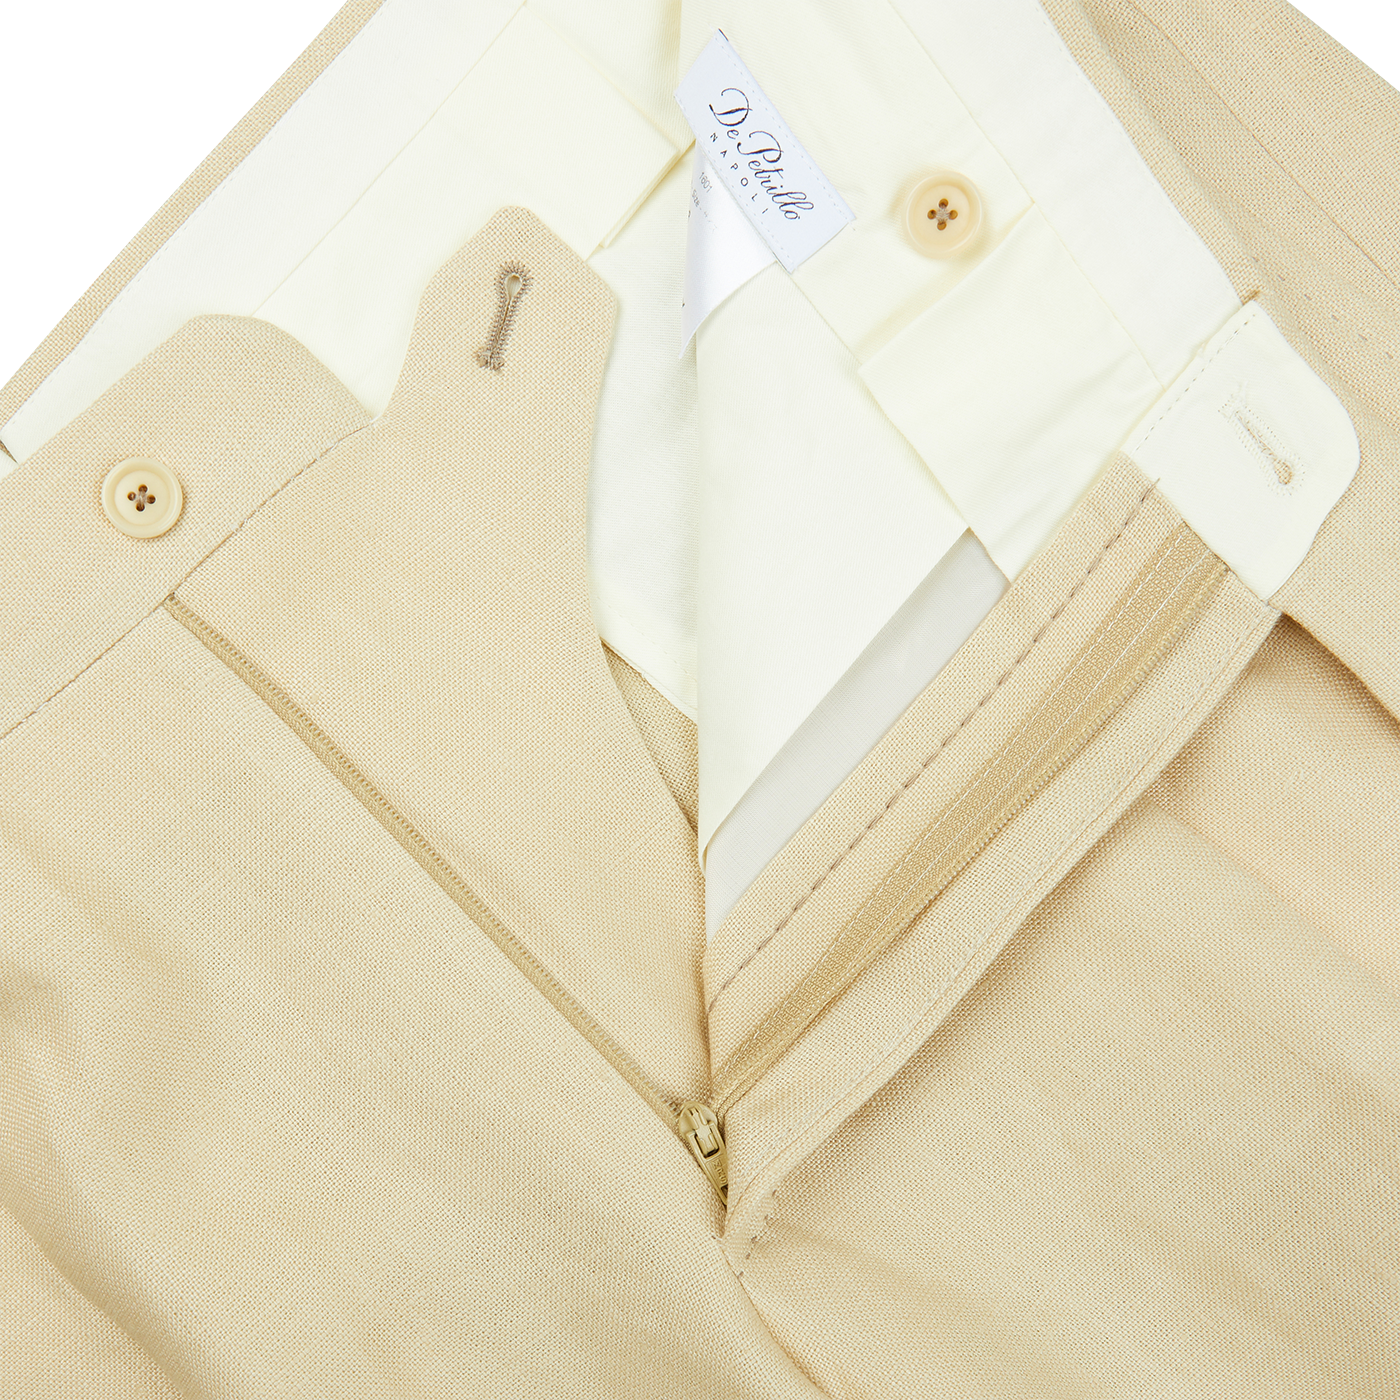 A pair of Caramel Beige Irish Linen Modello B trousers with a zipper by De Petrillo.